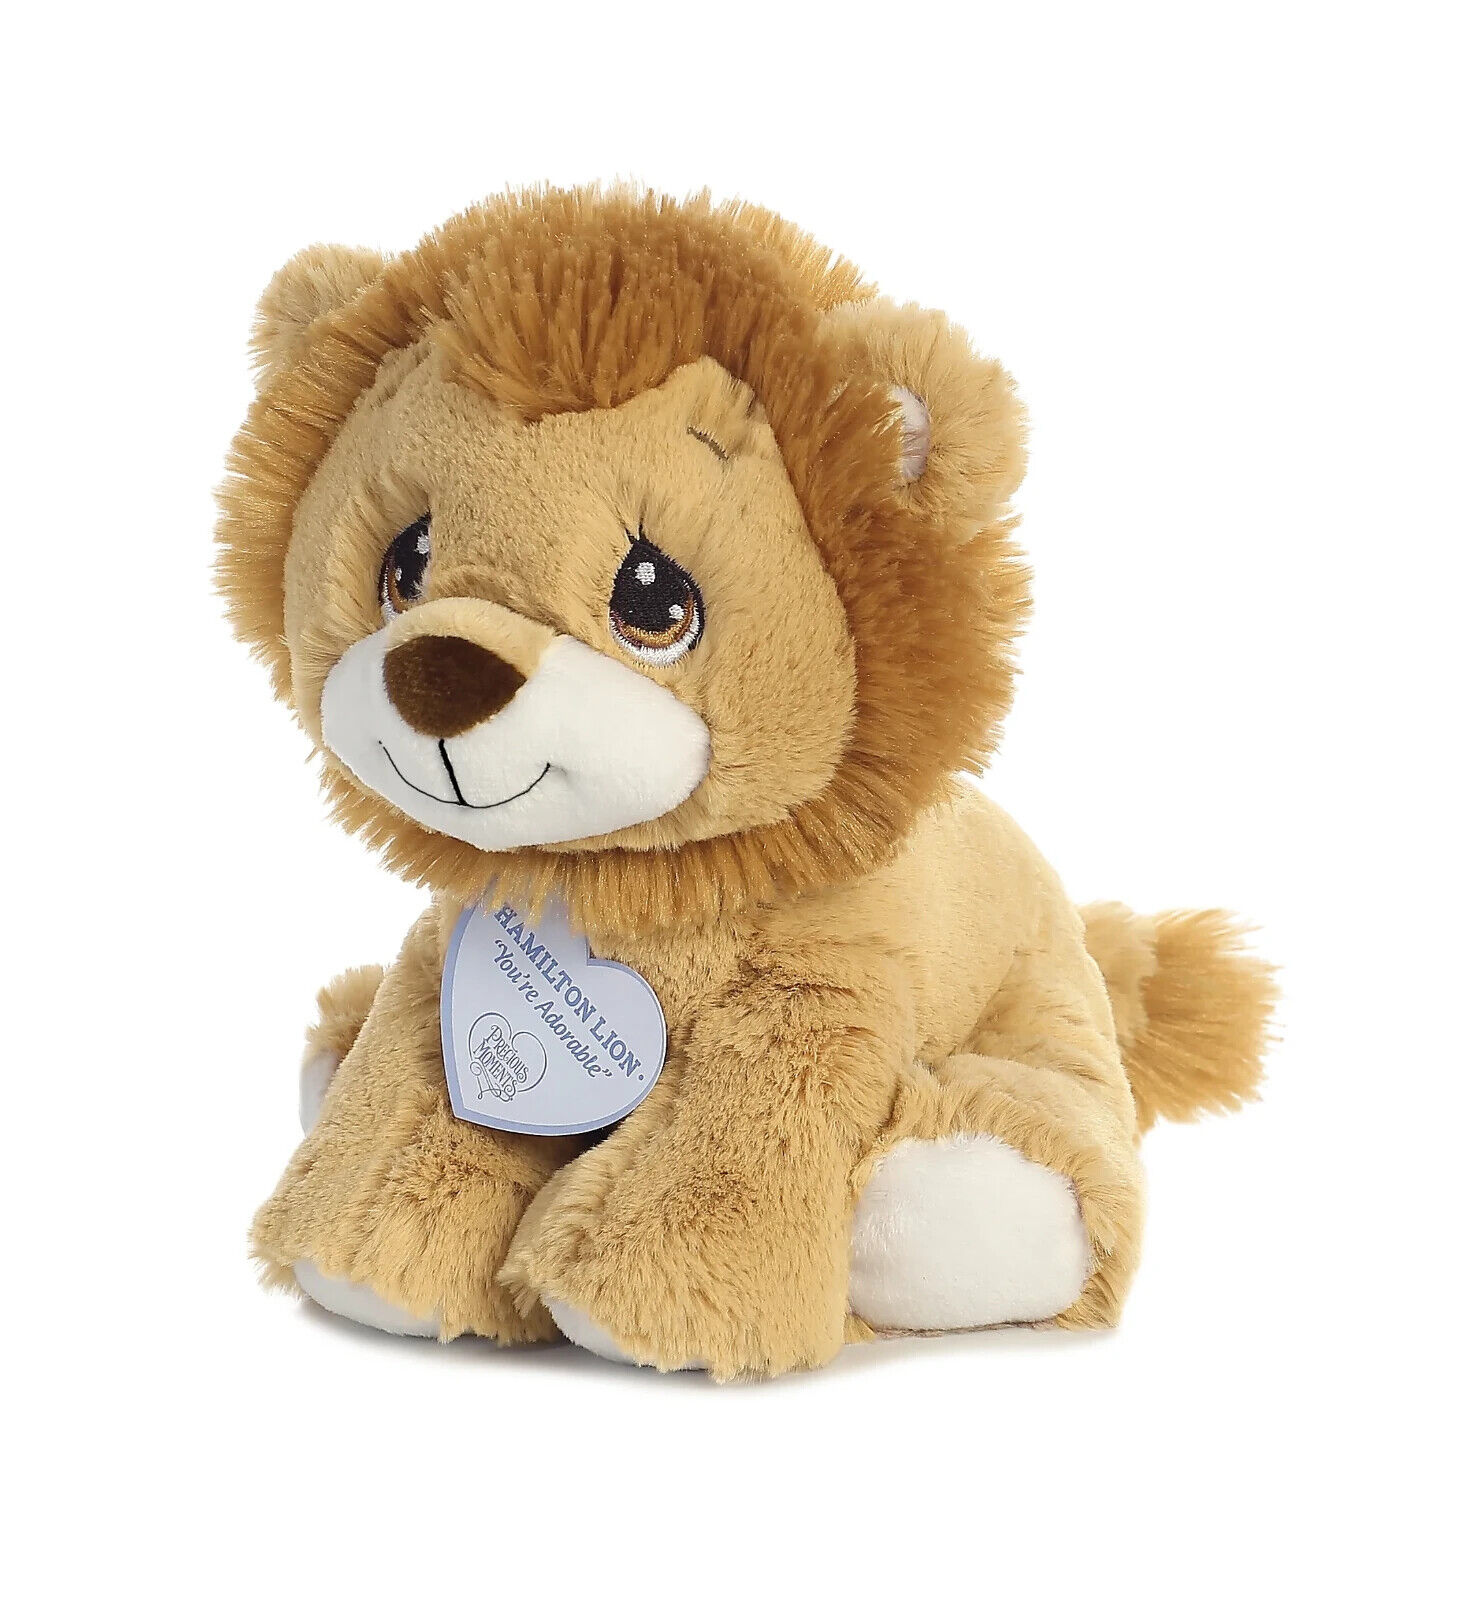 Precious Moments HAMILTON LION Stuffed Animal Plush, 8.5" Tall, by Aurora - image 2 of 4